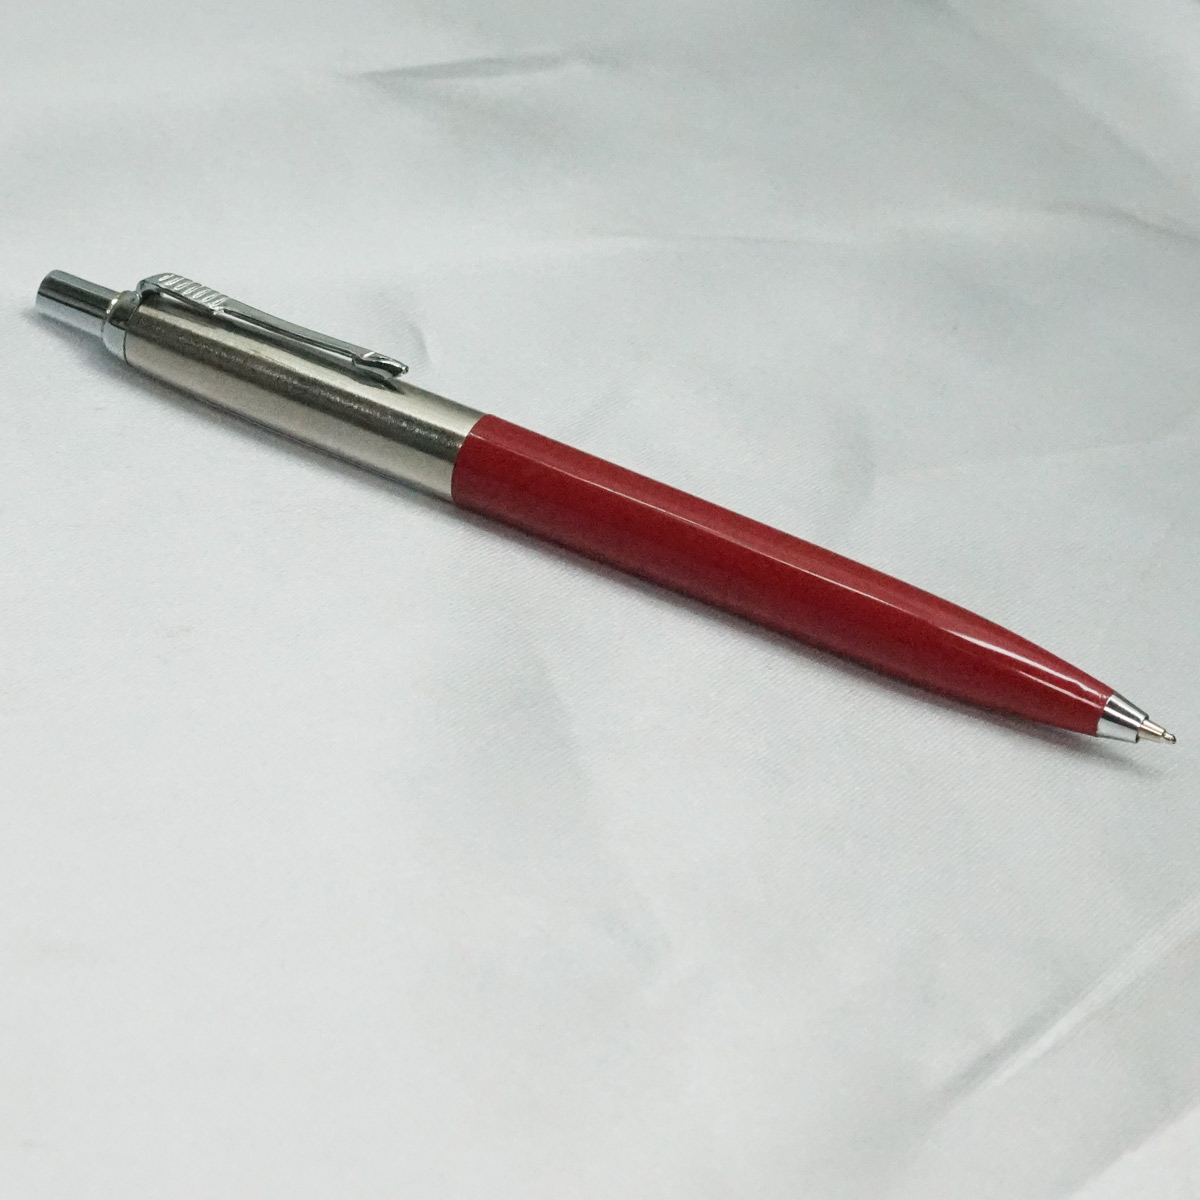 Penhouse.in Red Color Body With Silver Clip Fine Tip Retractable Ball Pen SKU 21968